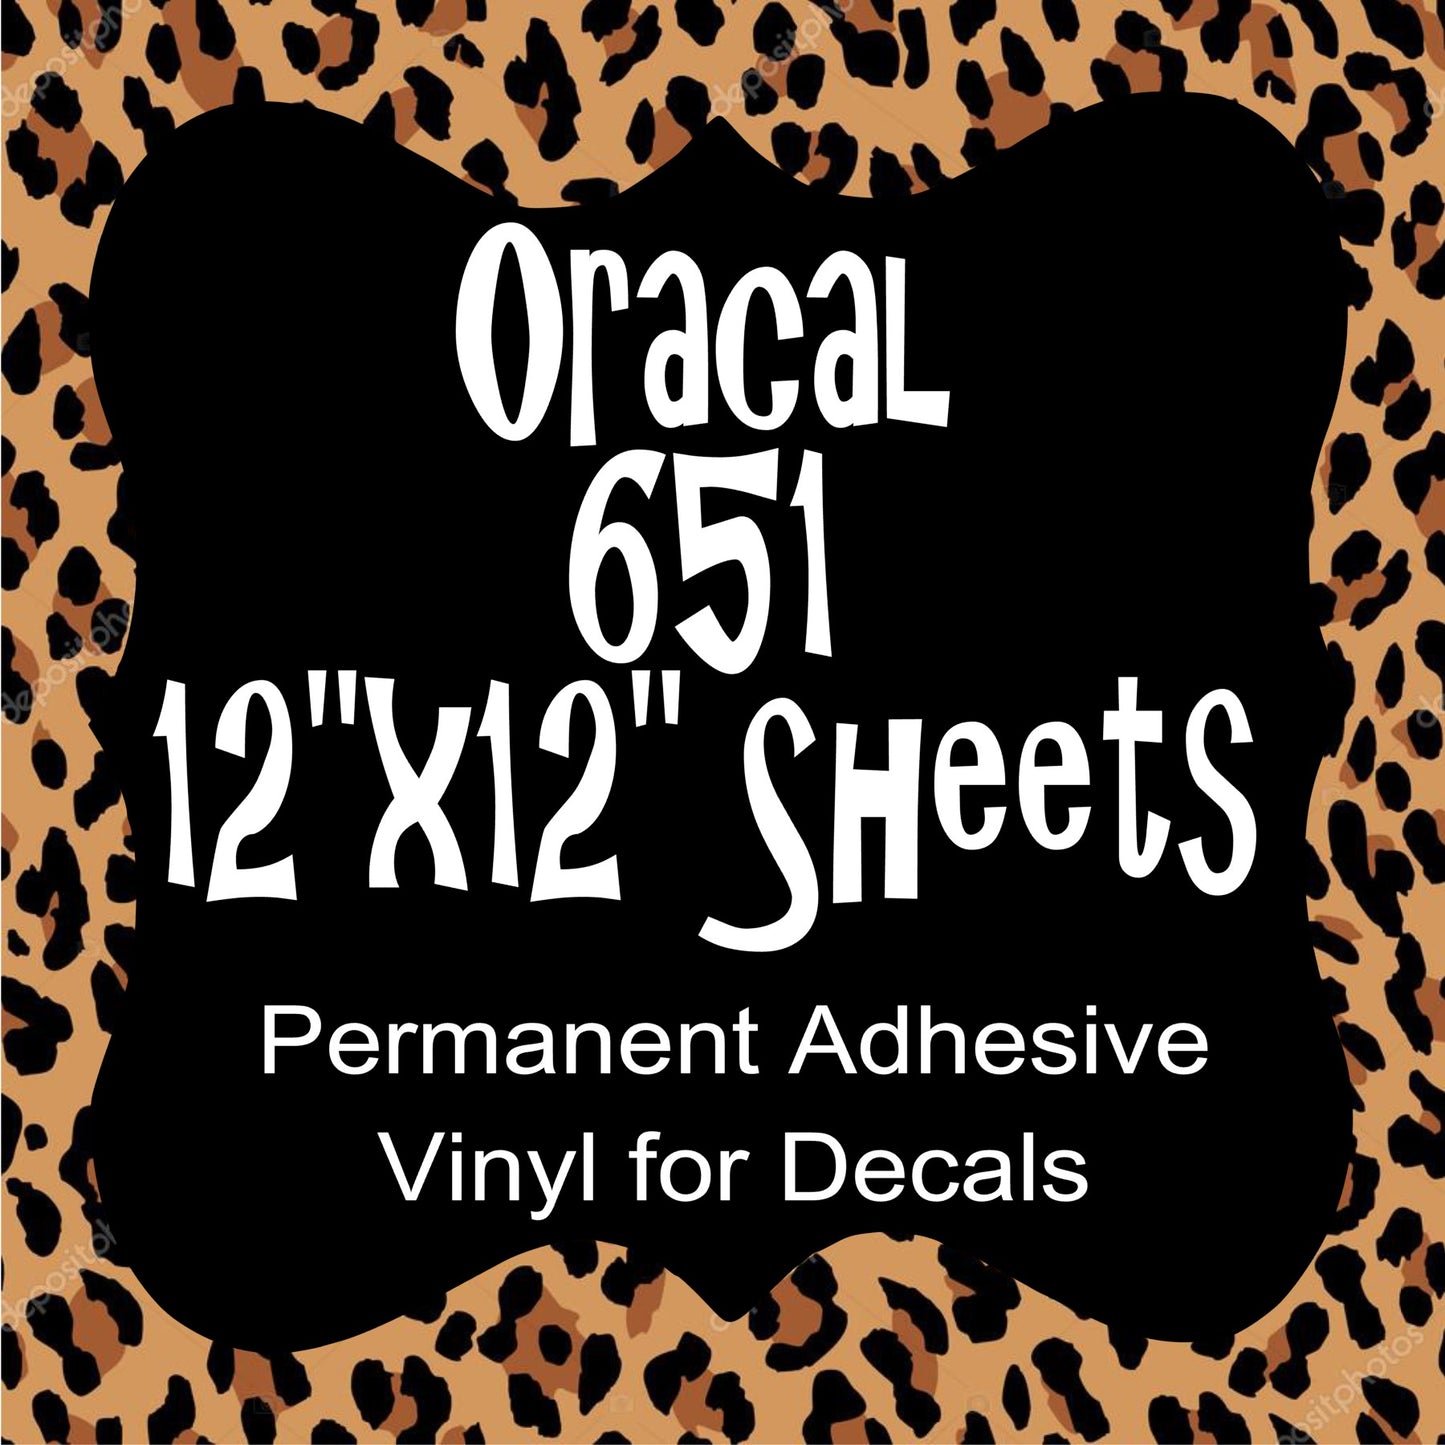 Oracal 651 - Sheets